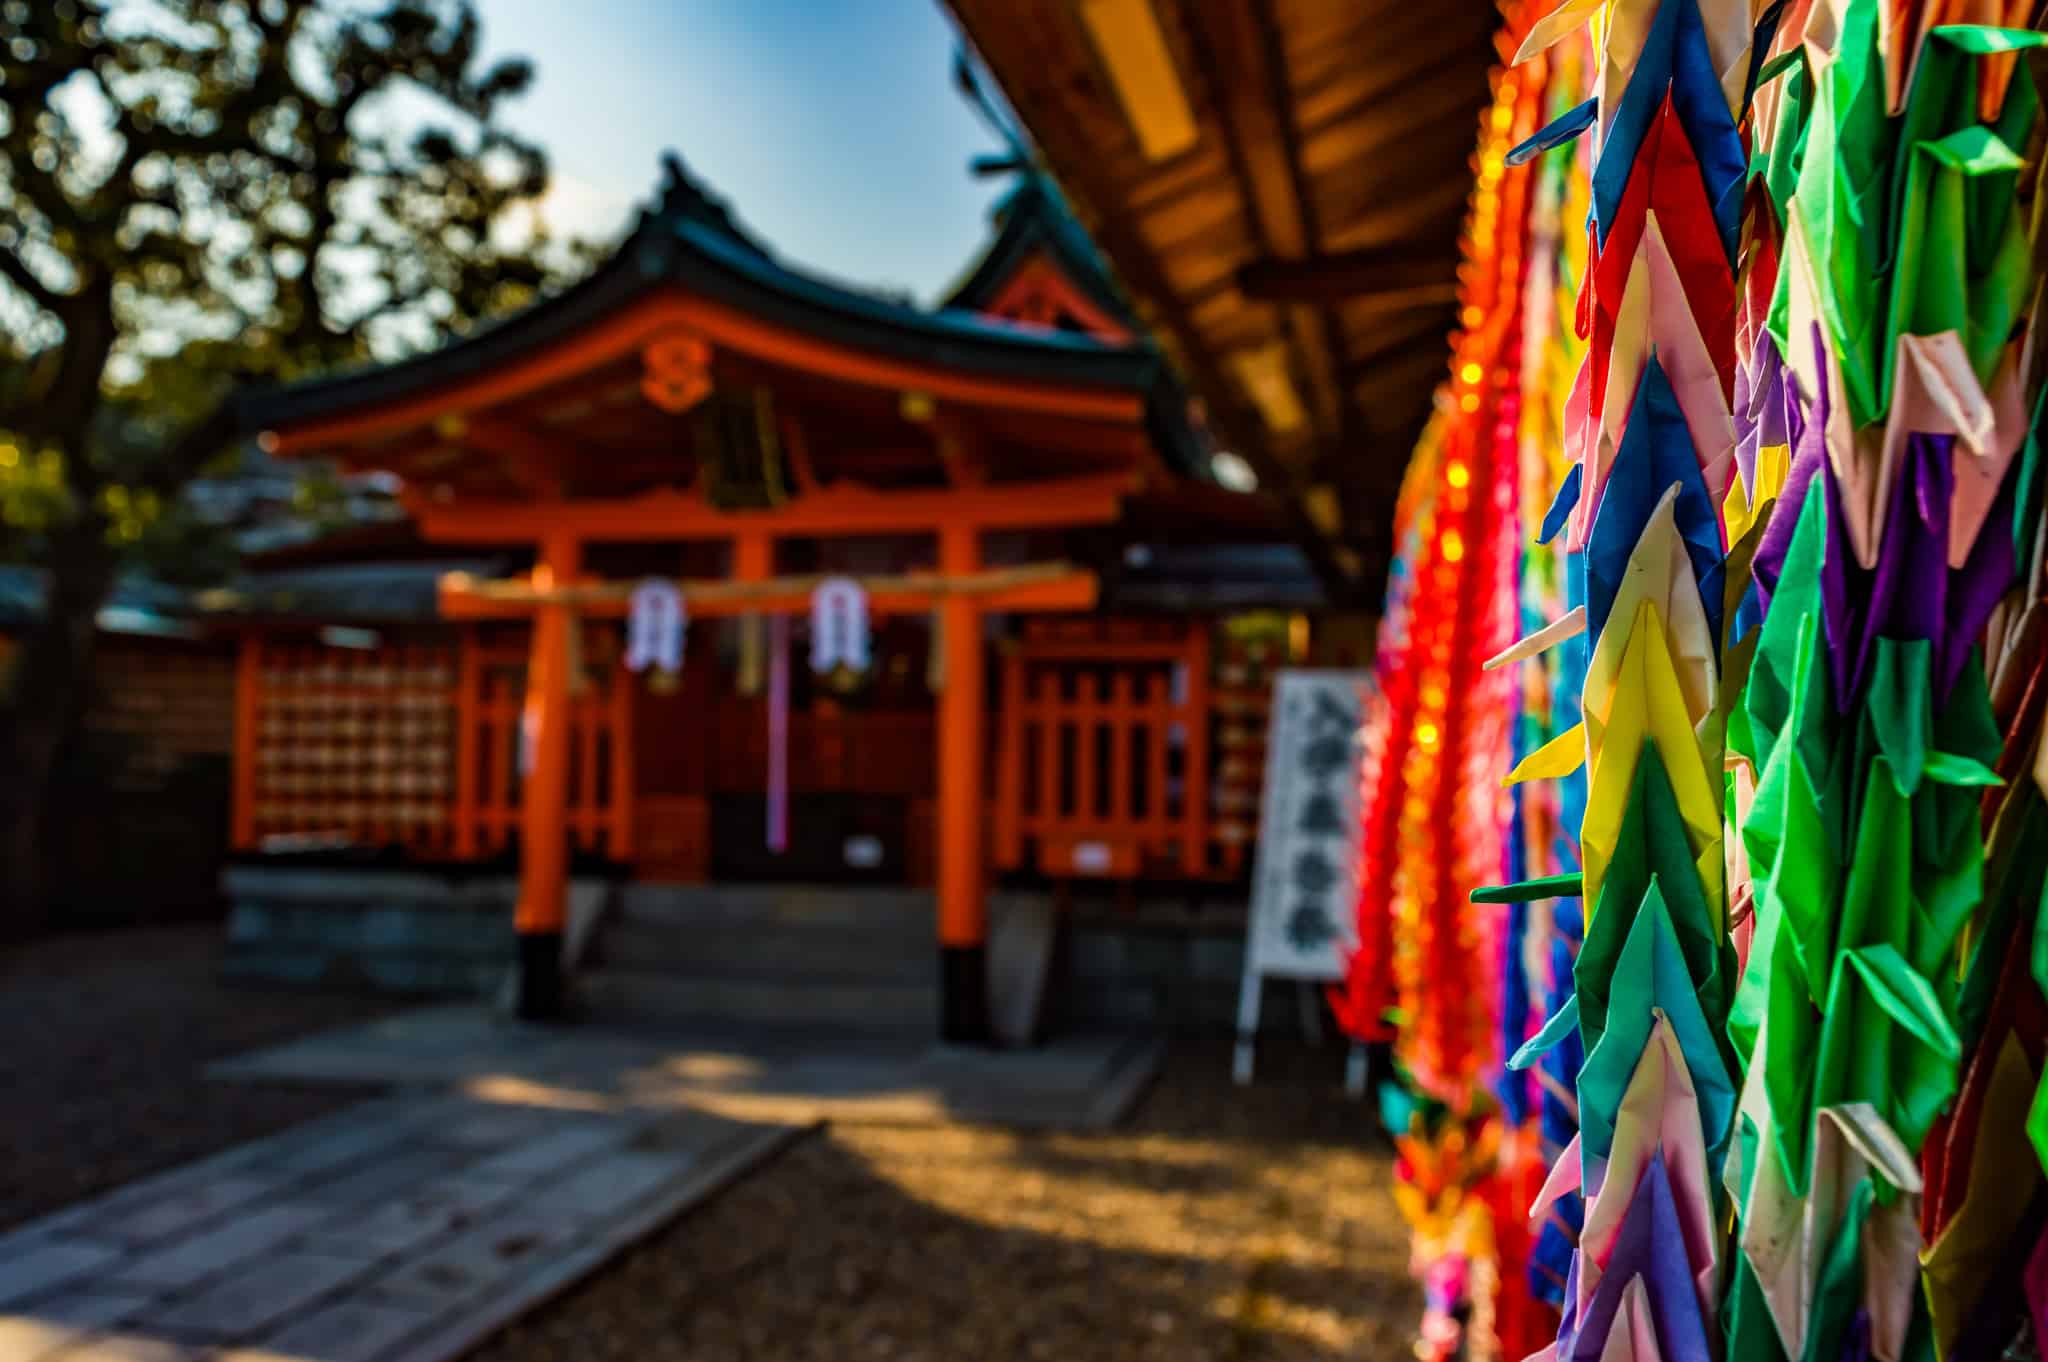 Paper cranes at Kyoto's Fushimi Inari Shrine, Japan